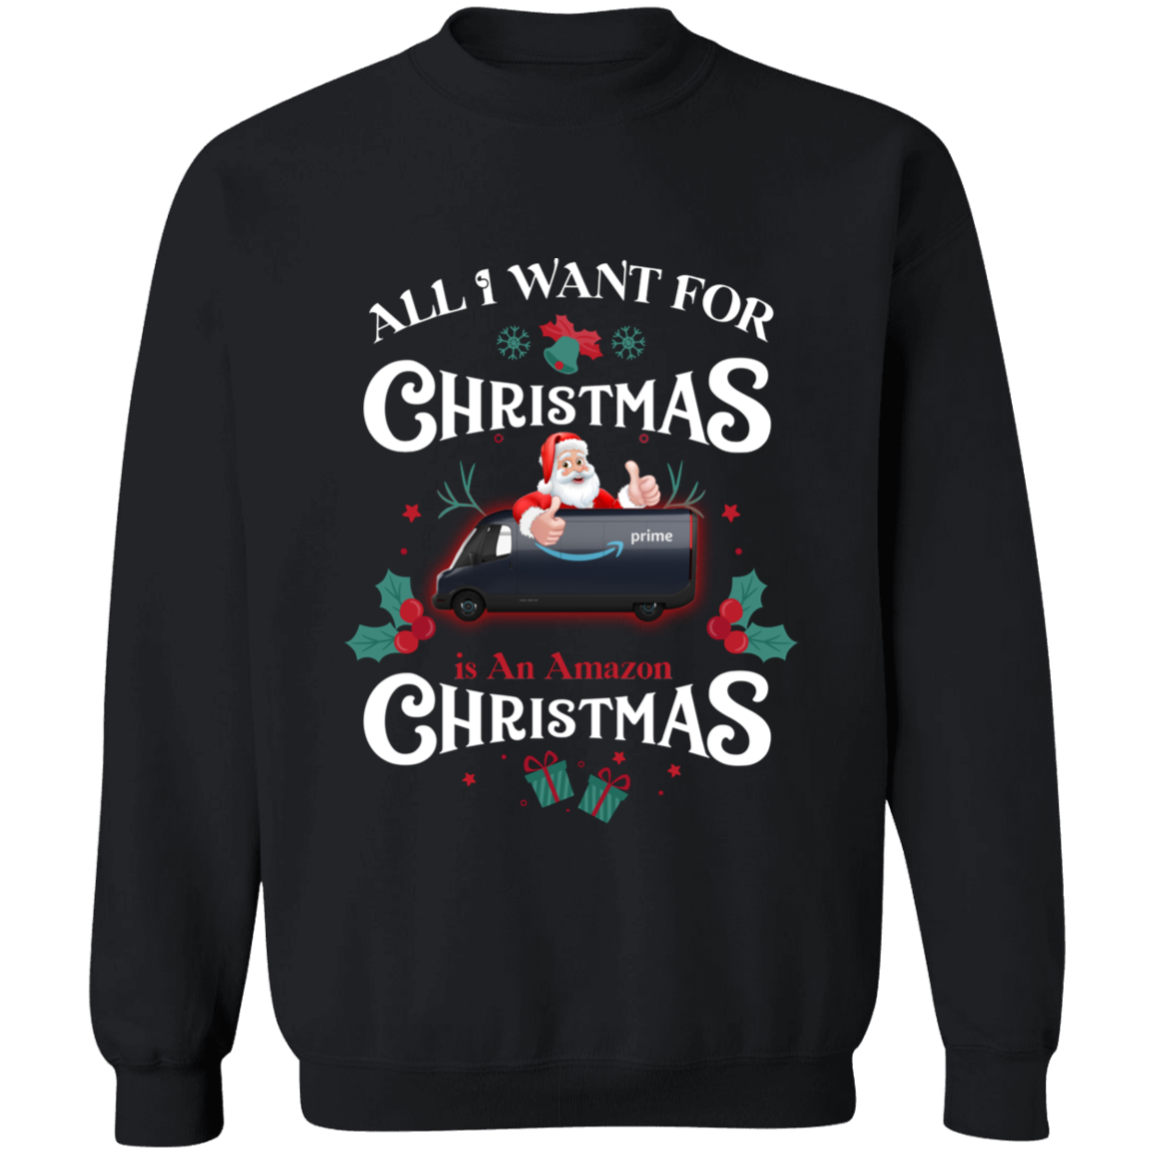 All I want for Christmas is An Amazon Christmas Sweatshirt